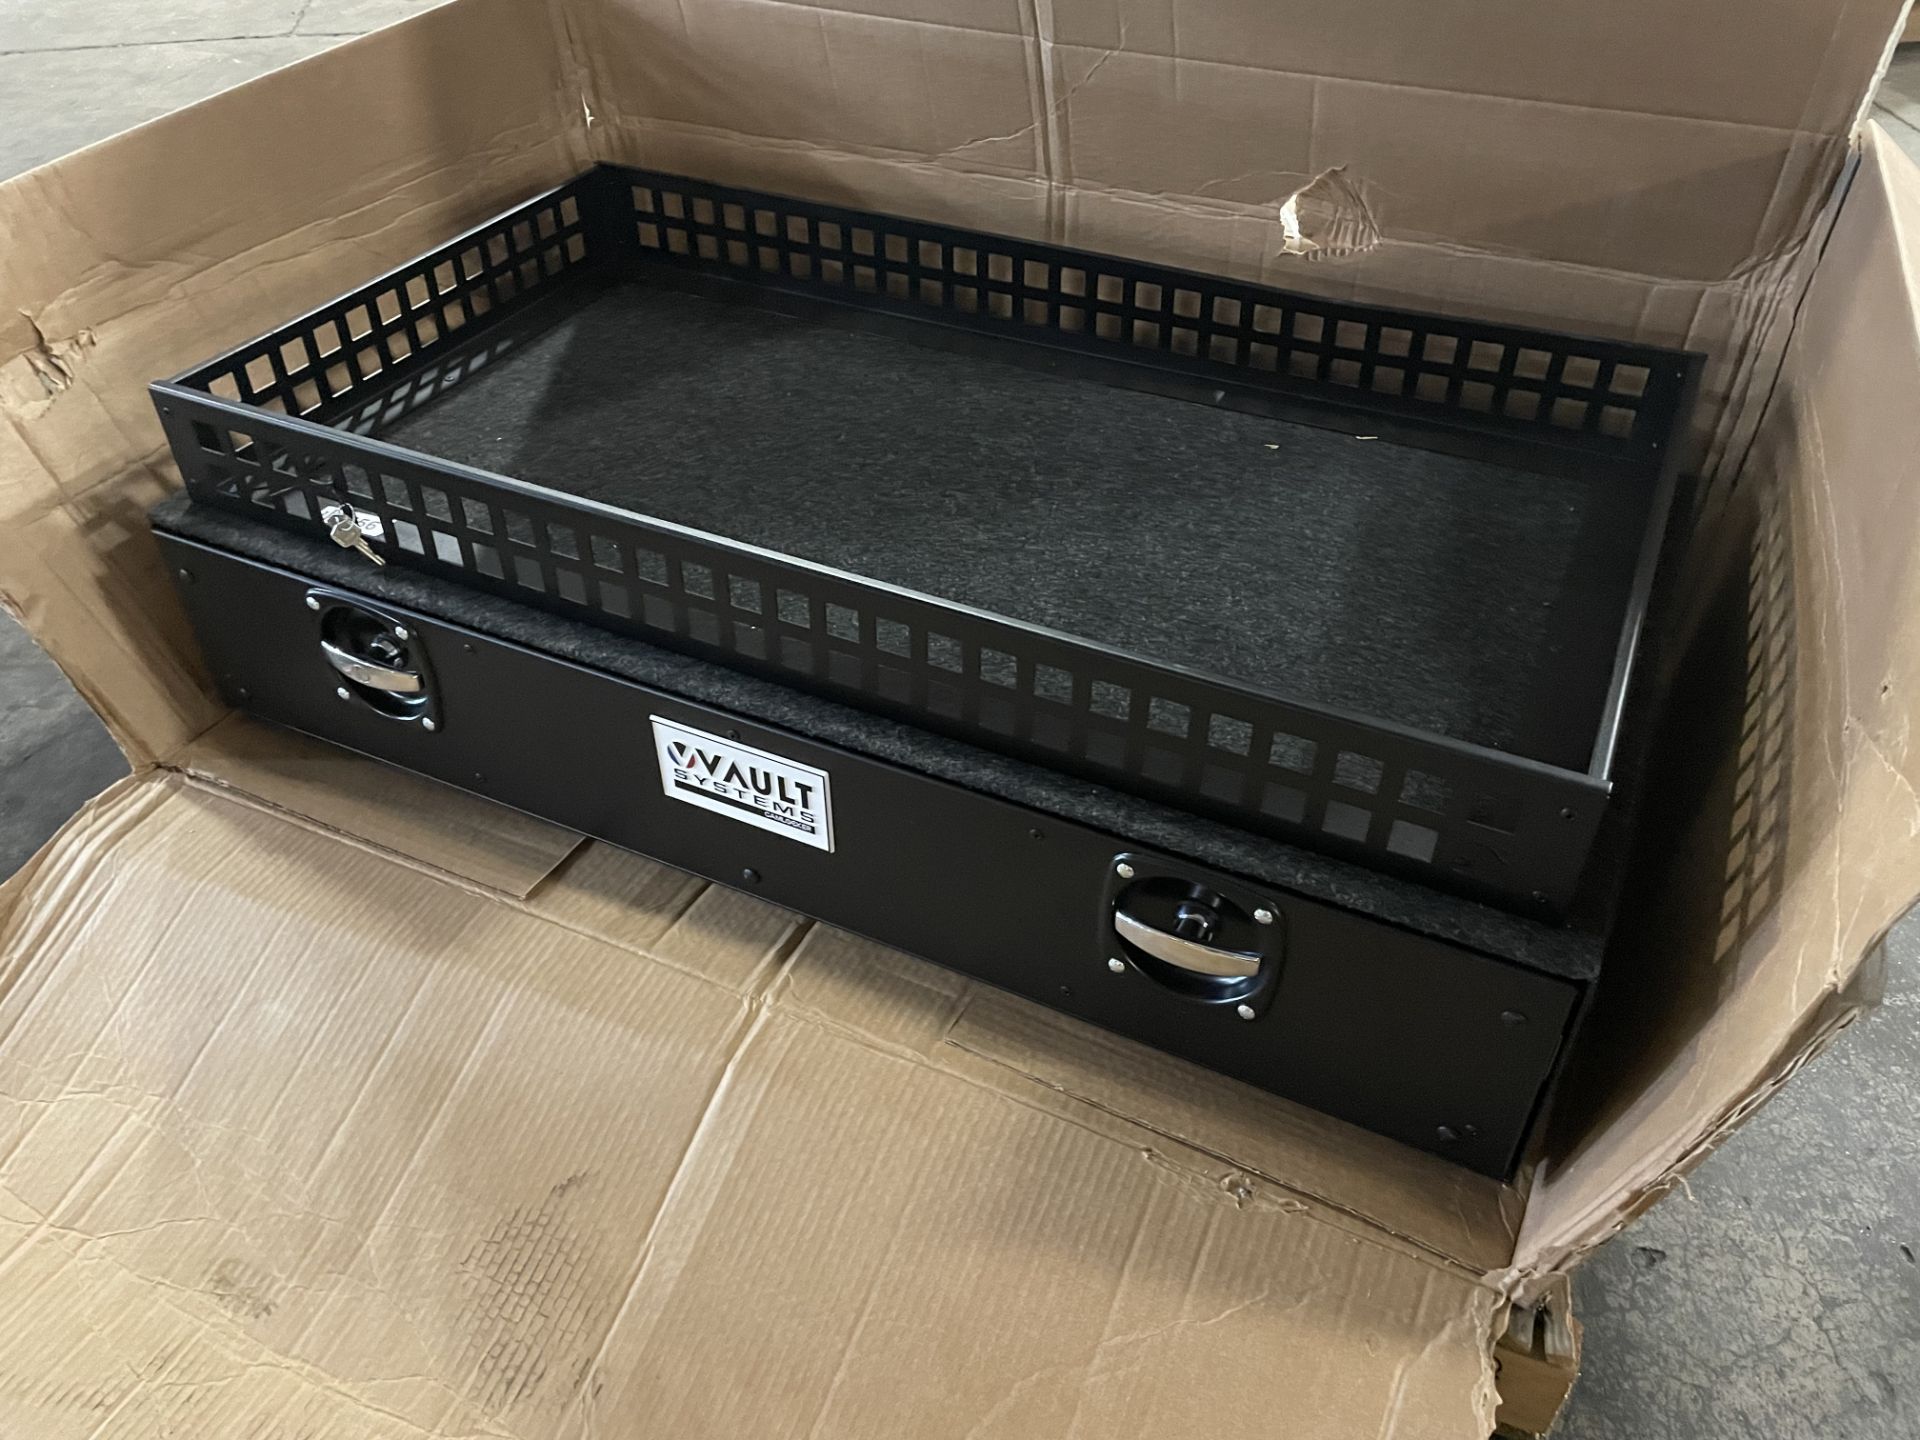 NEW in Box - Vault Systems Camlocker